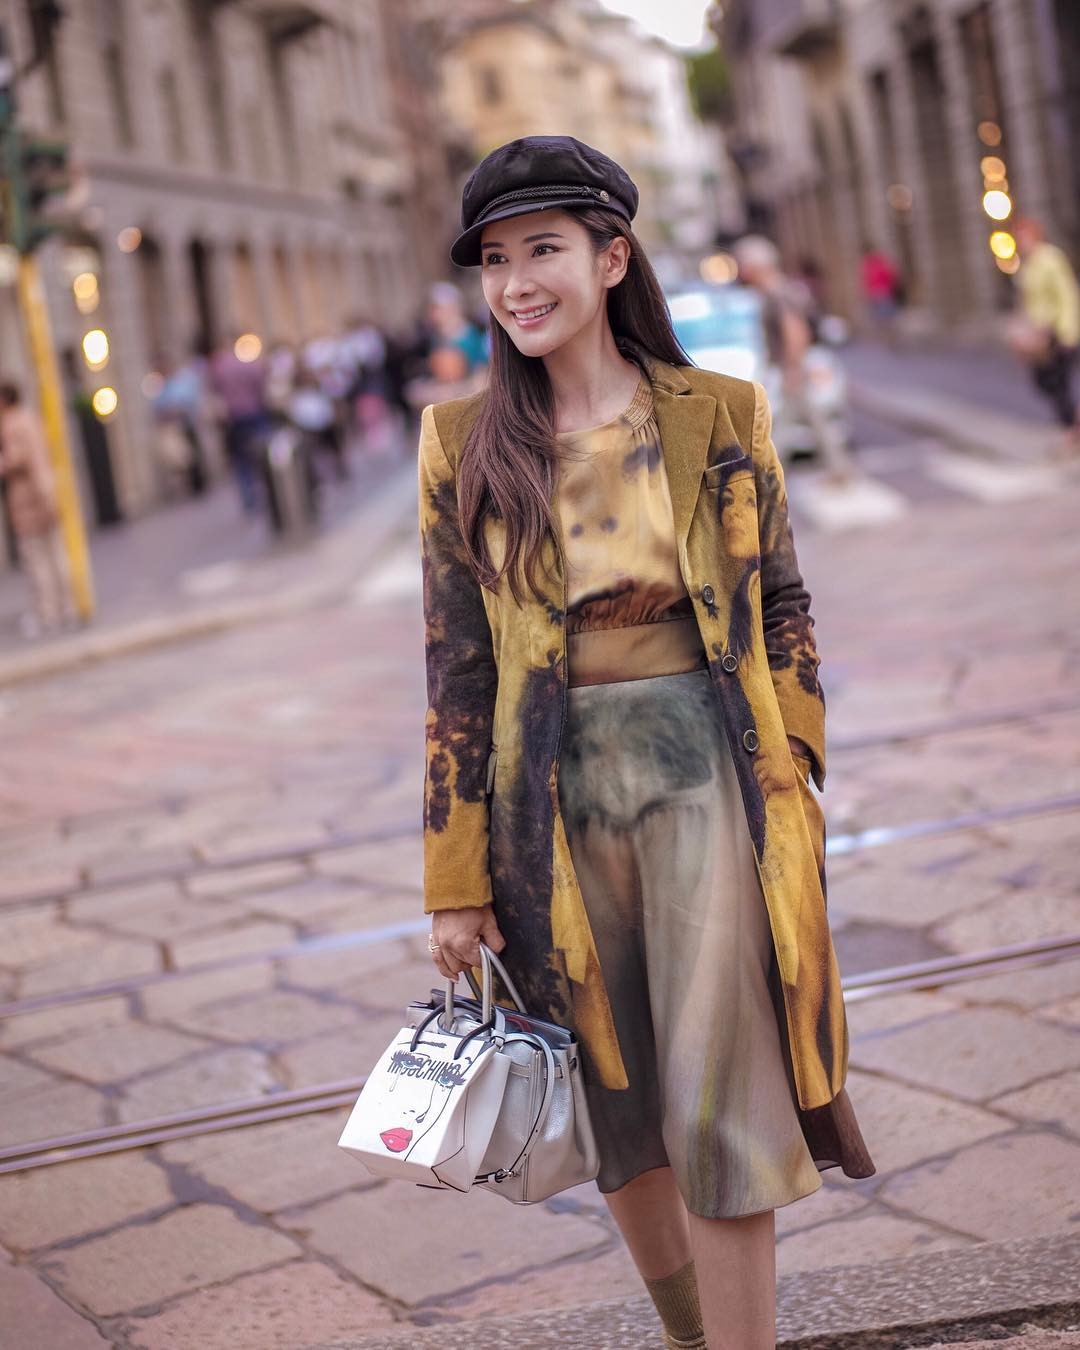 Singaporean socialite and avid Instagram fashion blogger Jamie Chua. Photo: Instagram